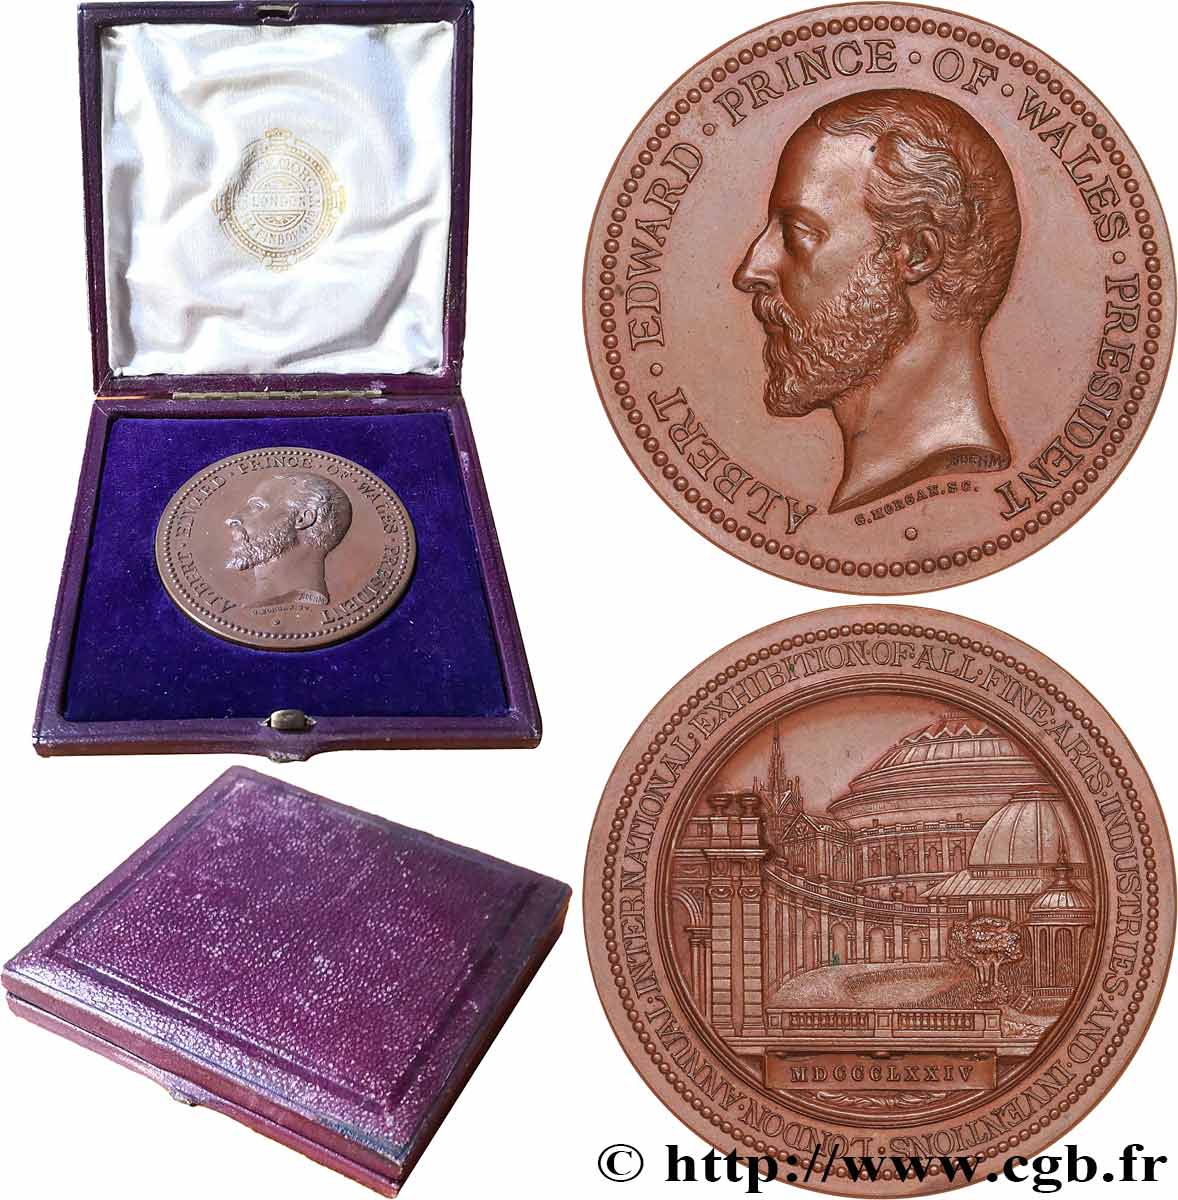 GRAN BRETAGNA - VICTORIA Médaille, Prince Albert, Exposition internationale des arts et industrie SPL